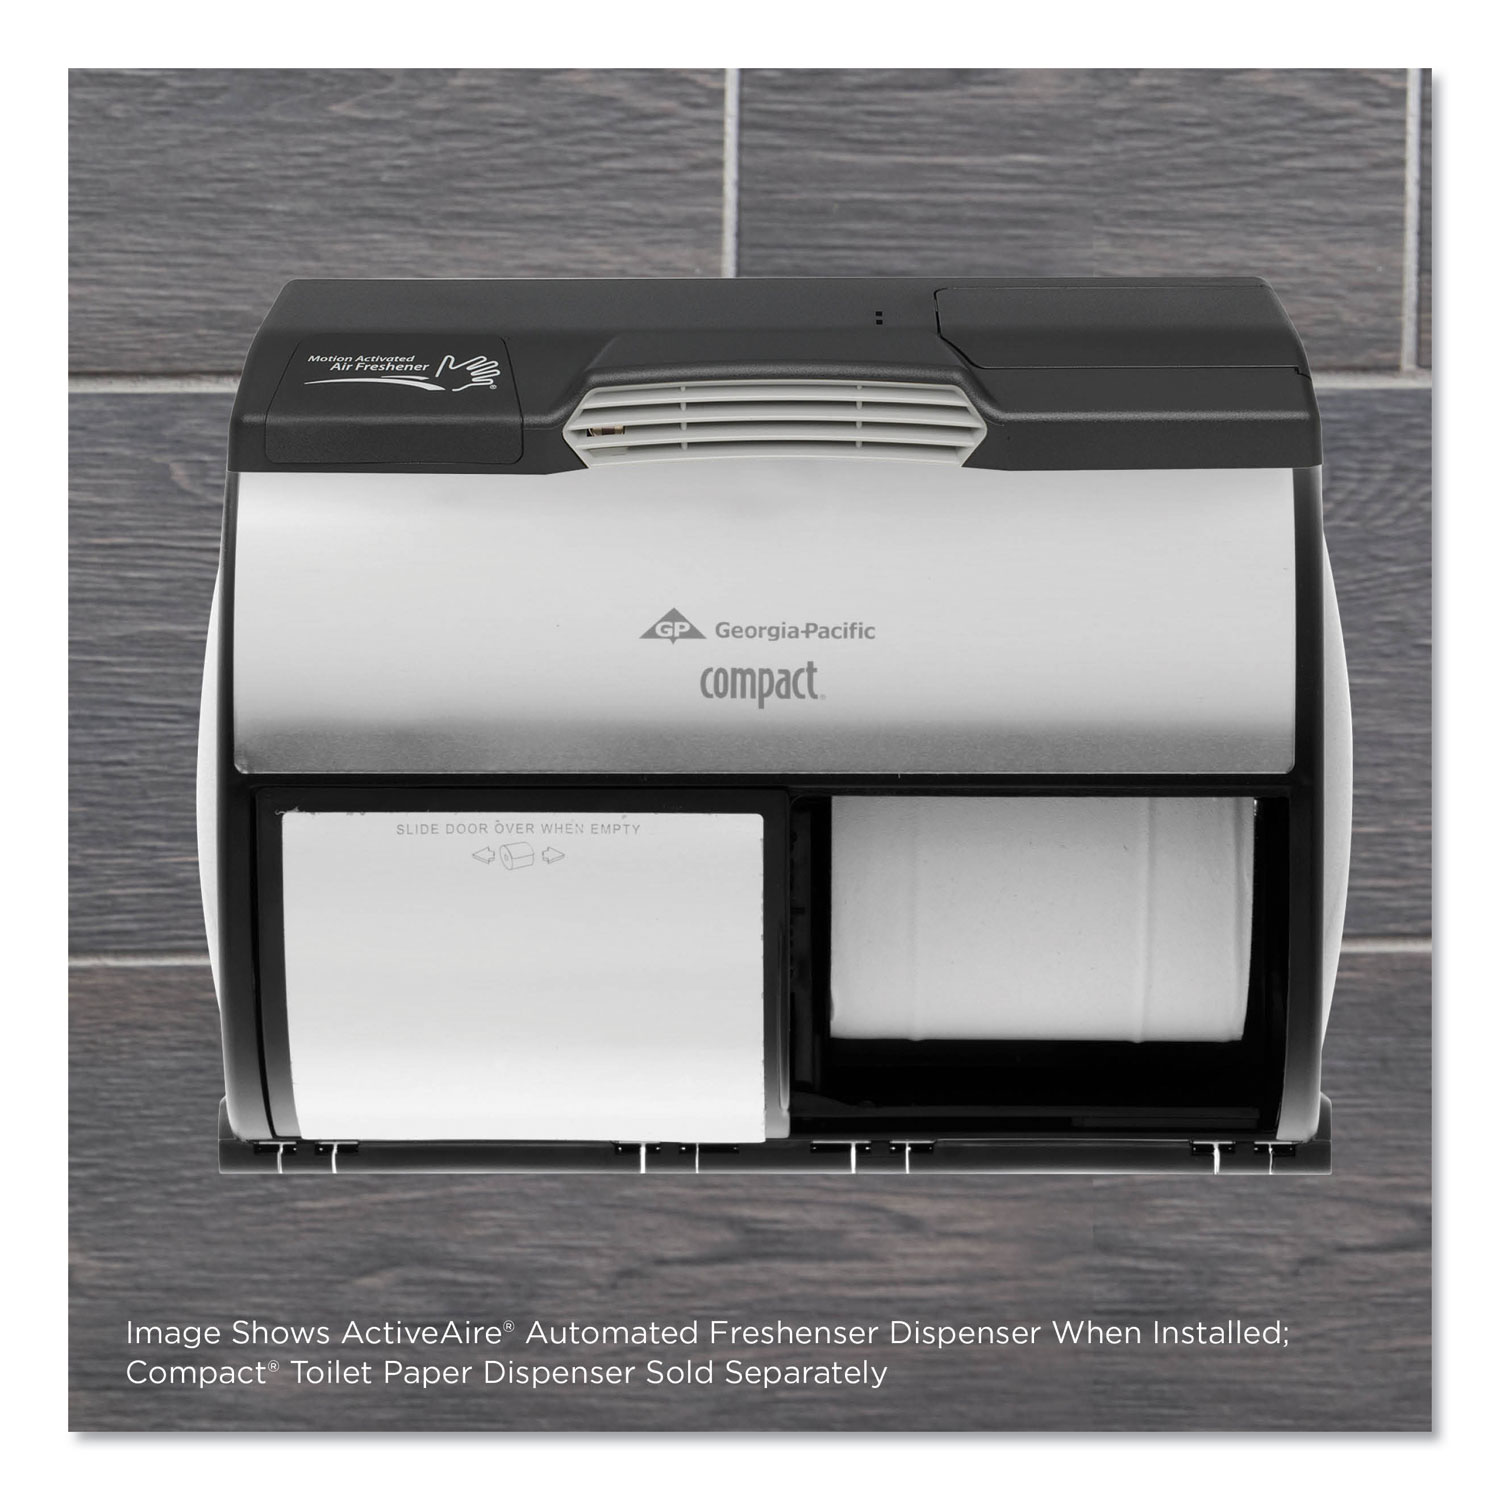  Georgia Pacific Professional 56765 ActiveAire Automated Freshener Dispenser for Compact Bath Tissue Dispenser, 10.63 x 2.88 x 3.75, Black (GPC56765) 